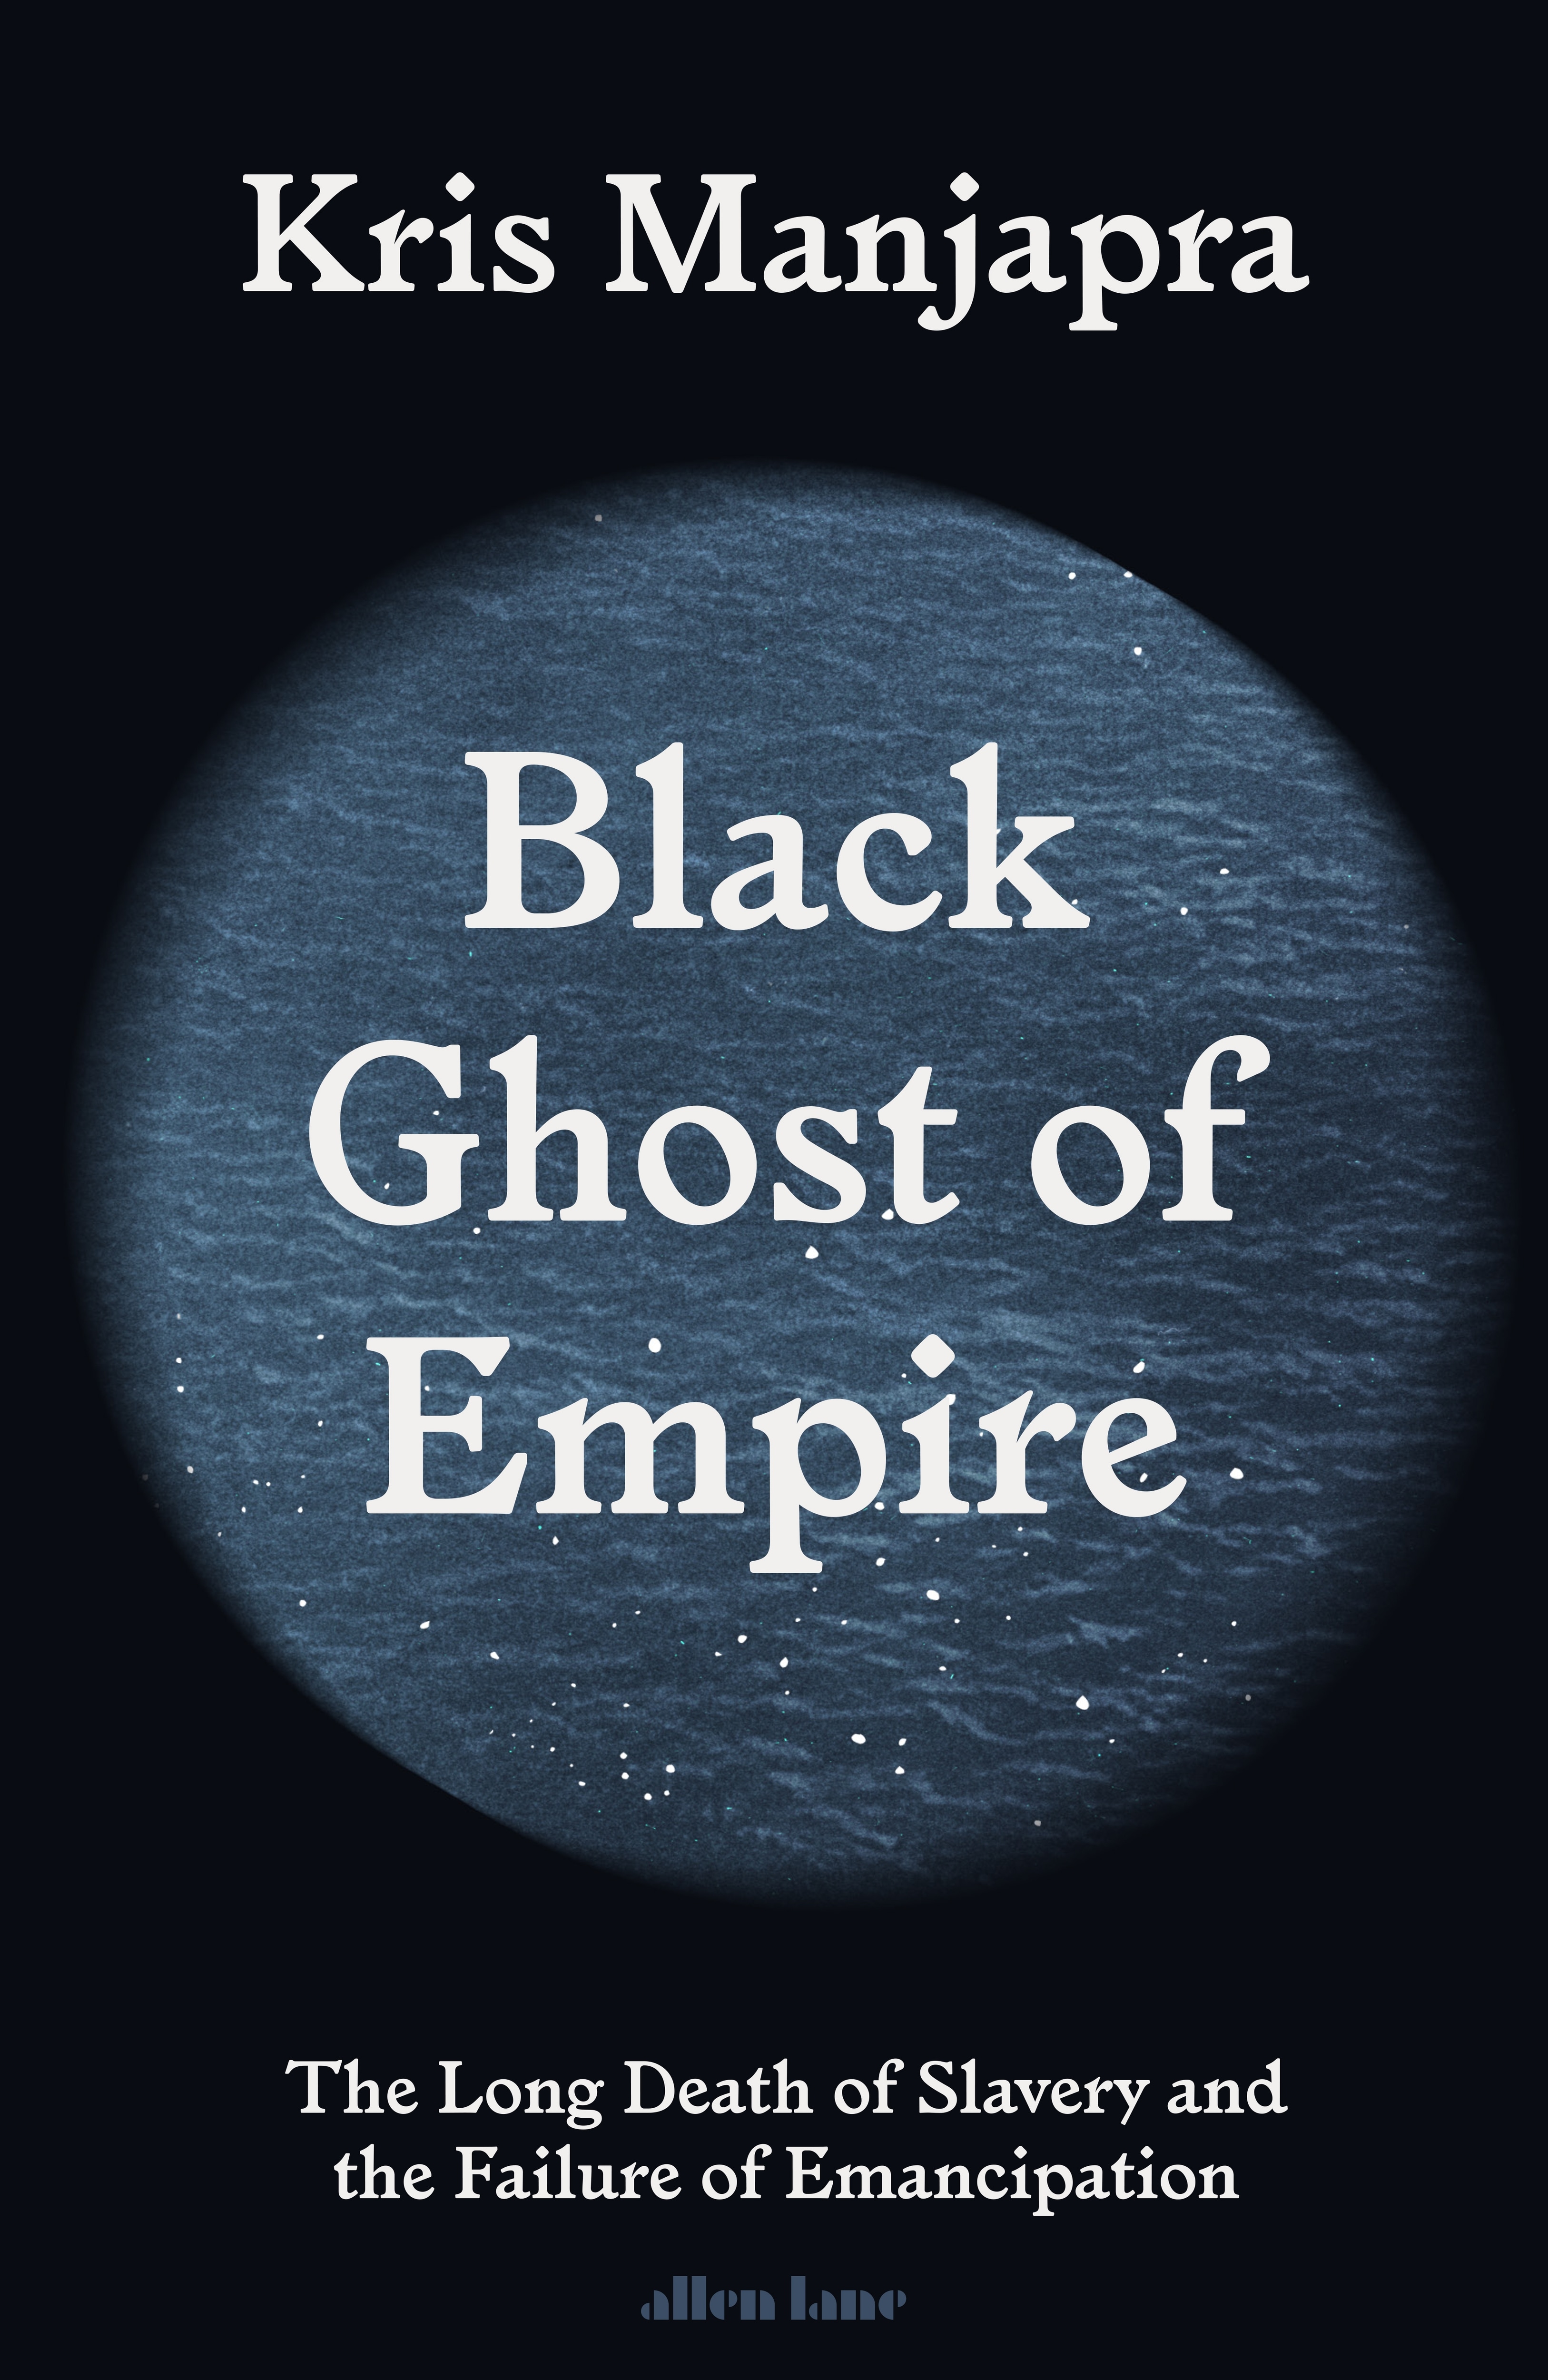 Book “Black Ghost of Empire” by Kris Manjapra — April 19, 2022